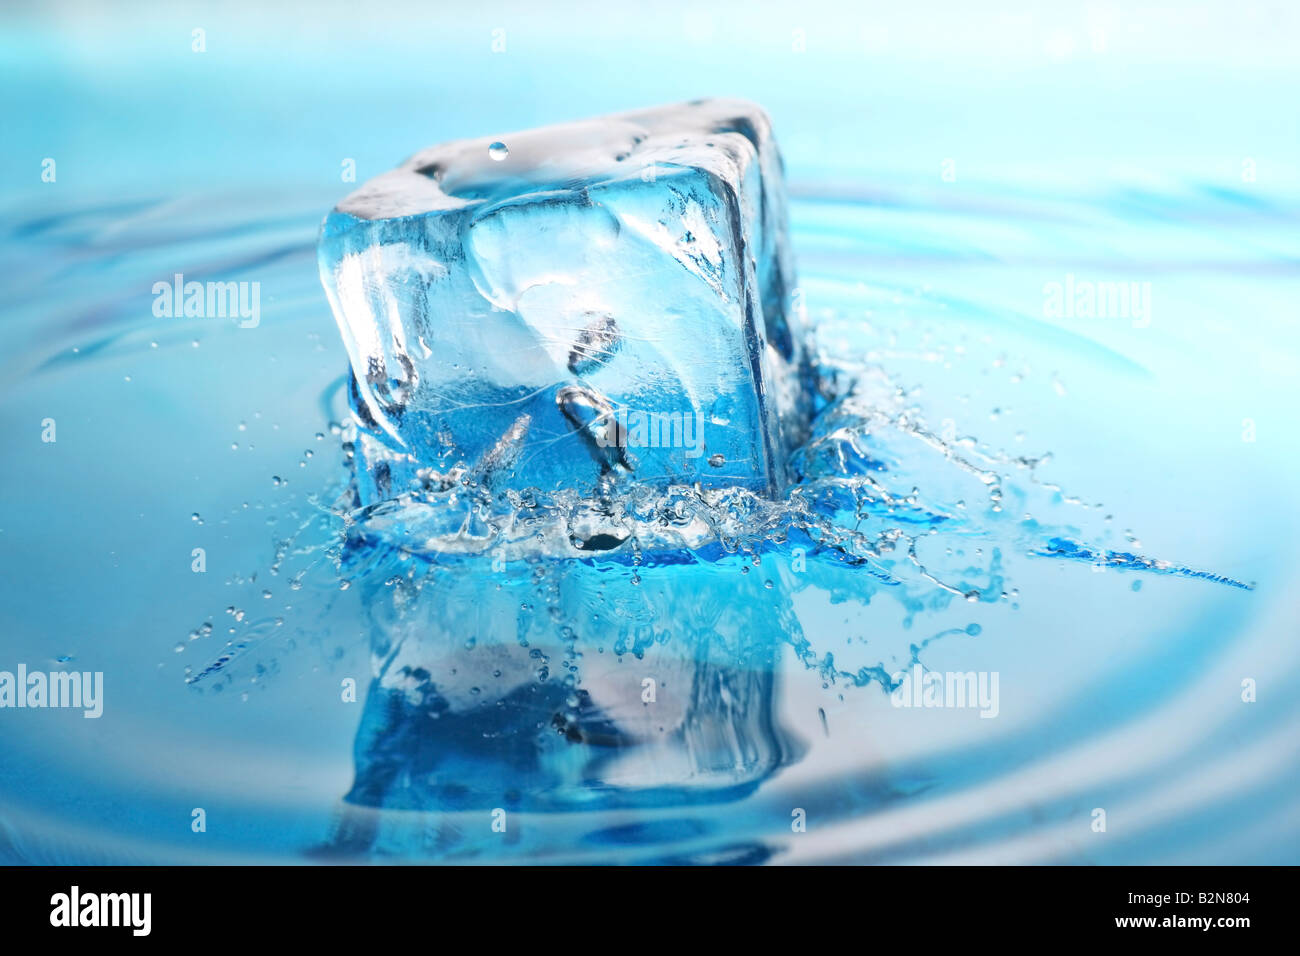 https://c8.alamy.com/comp/B2N804/cool-refreshing-ice-cube-dropped-into-freshly-poured-water-splashes-B2N804.jpg